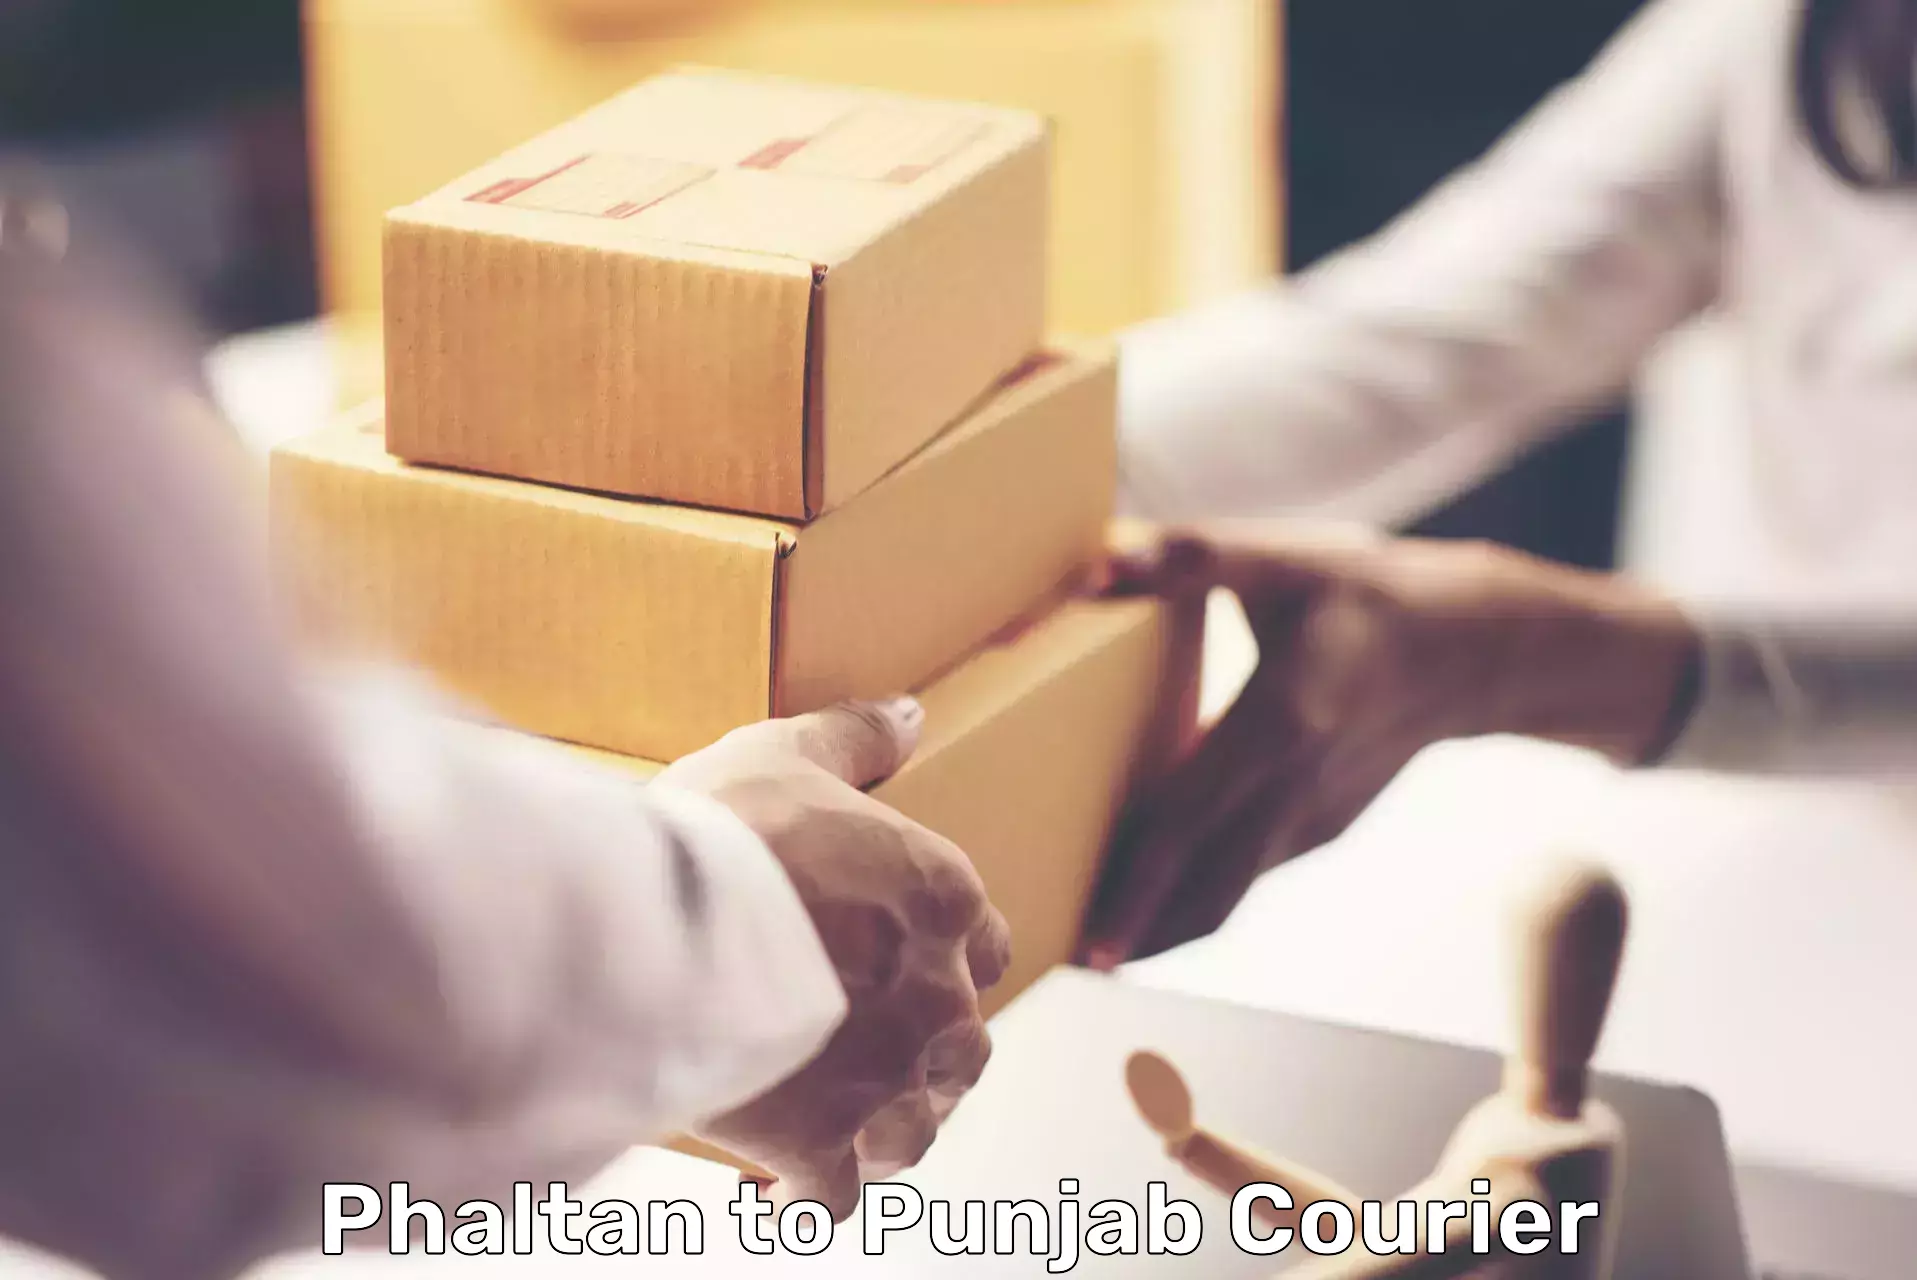 Global courier networks Phaltan to Punjab